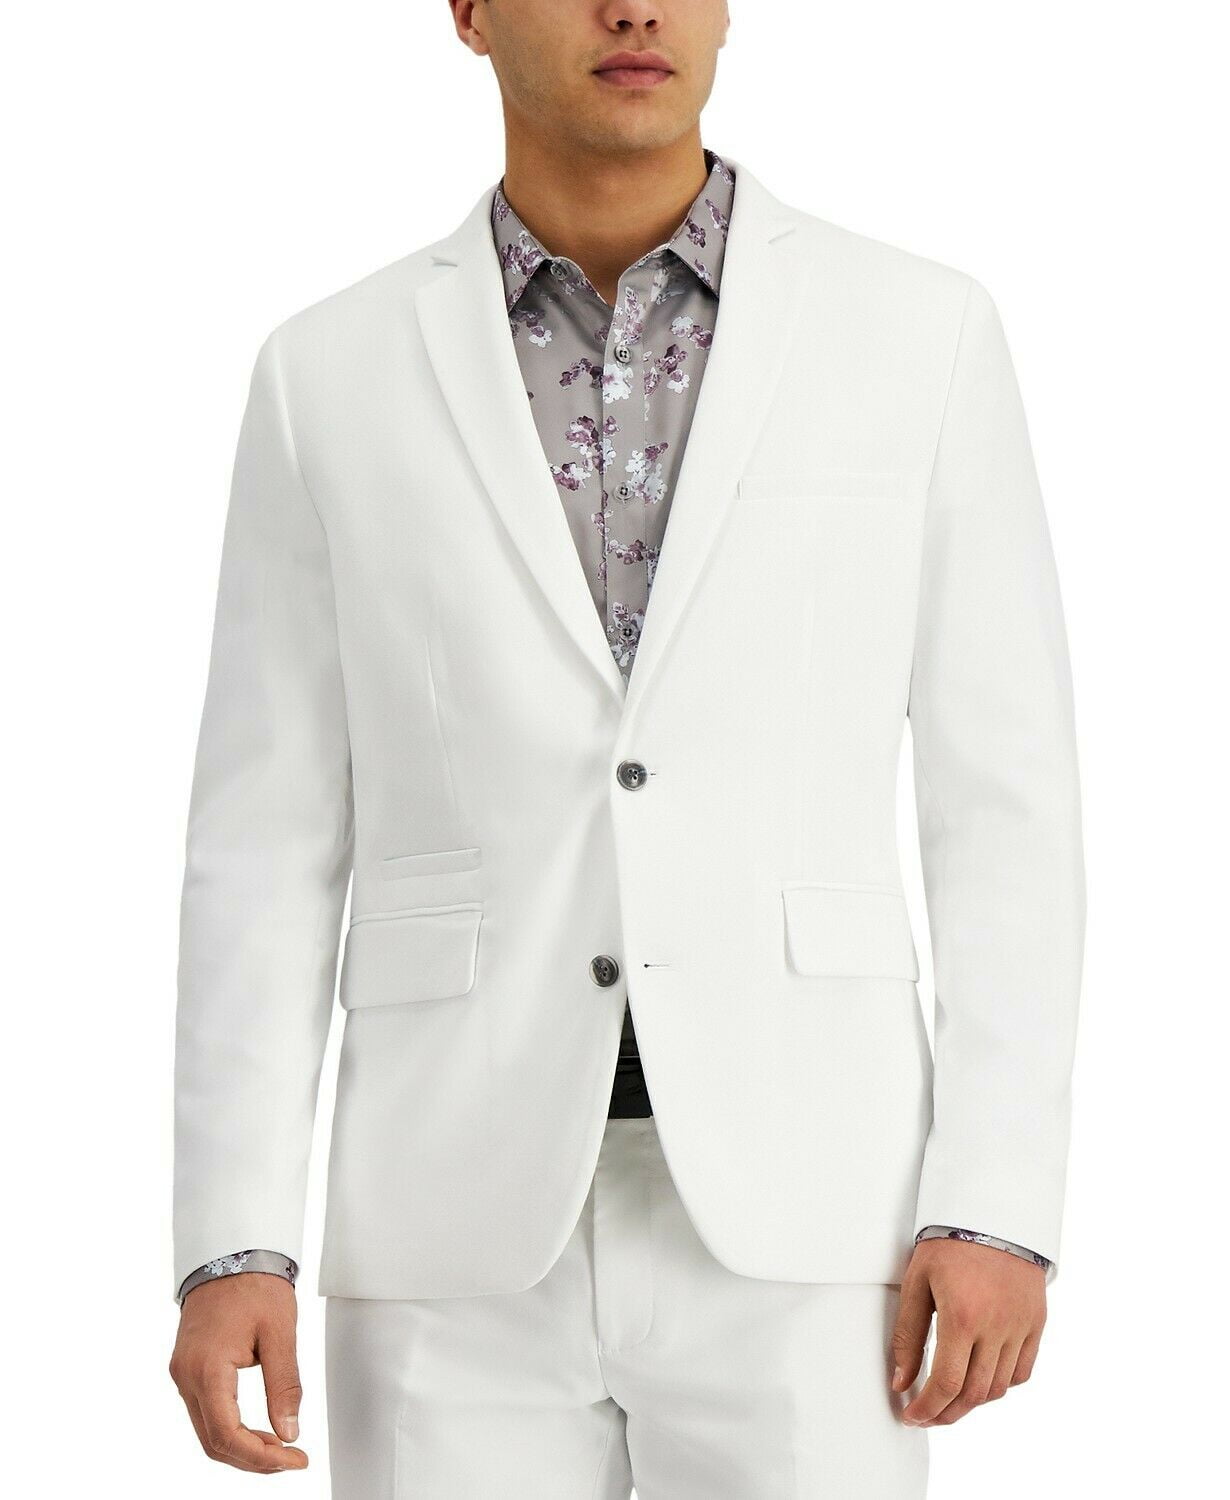 INC Men's Slim-Fit Stretch White Solid Sport Coat White Pure-Size XL 46-48R  